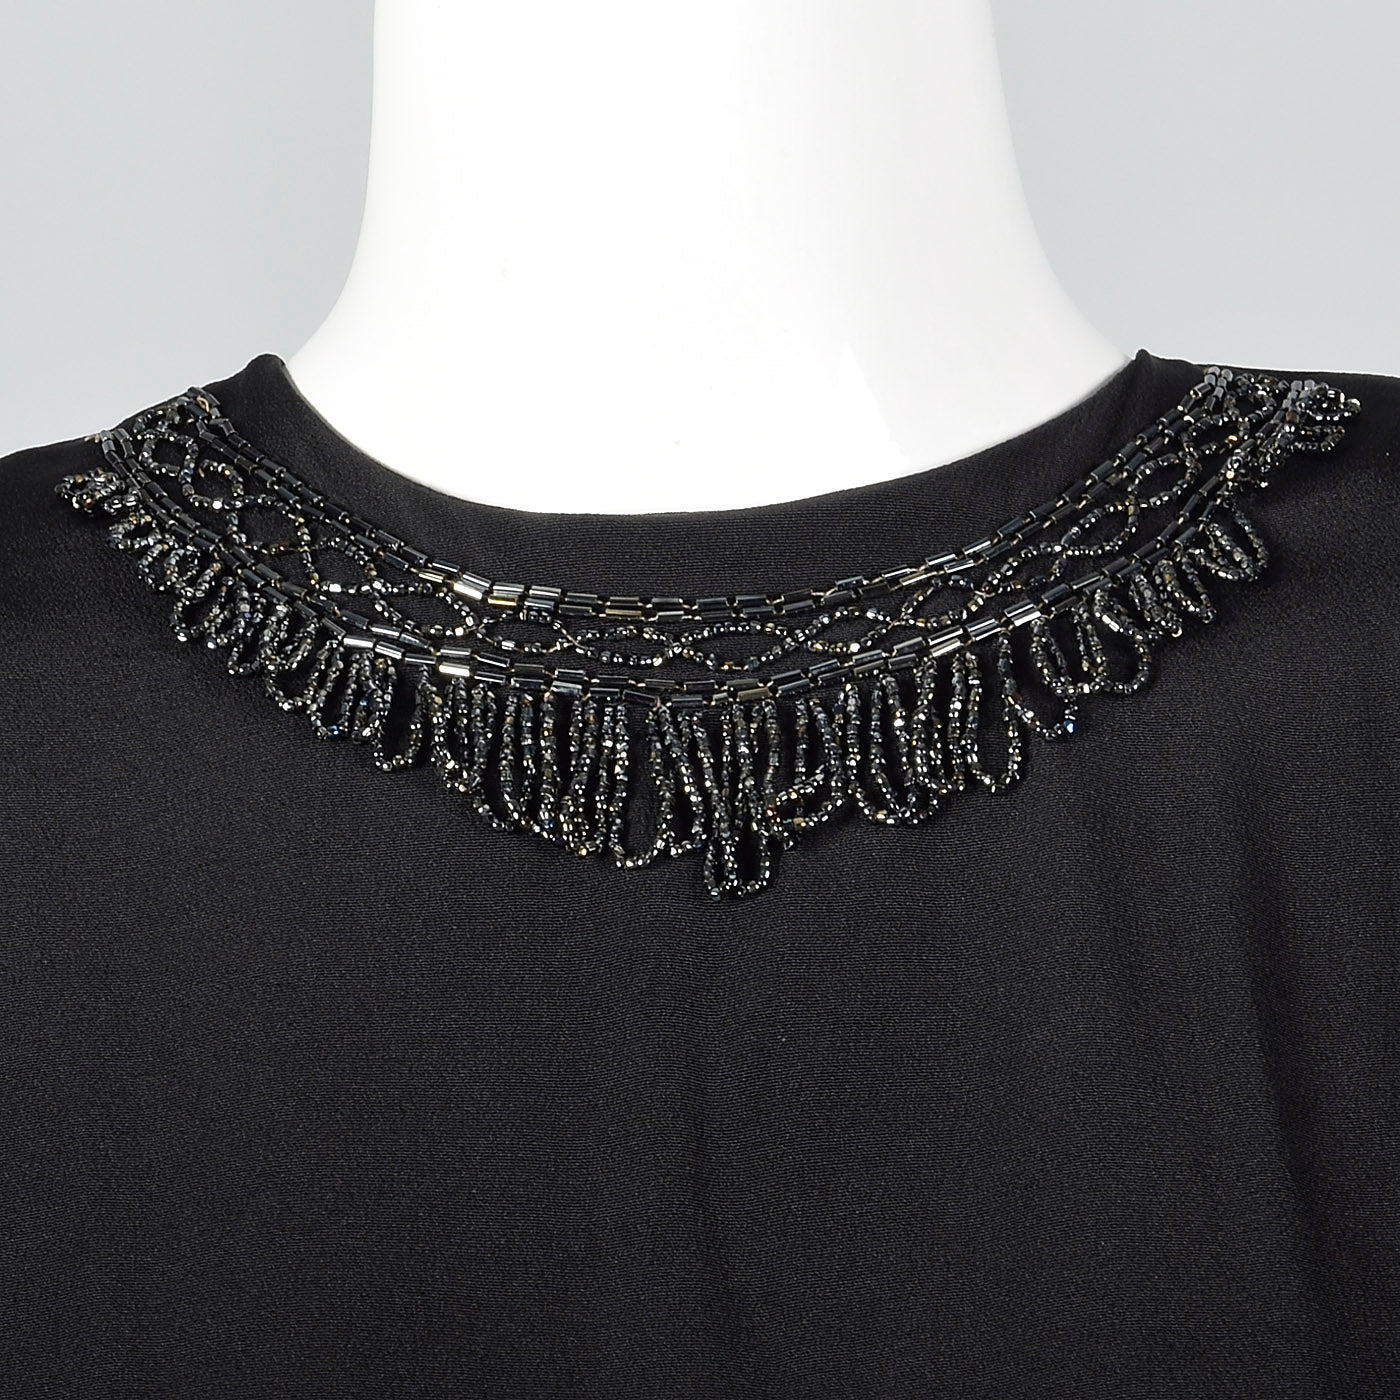 1940s Black Rayon Dress with Beaded Collar